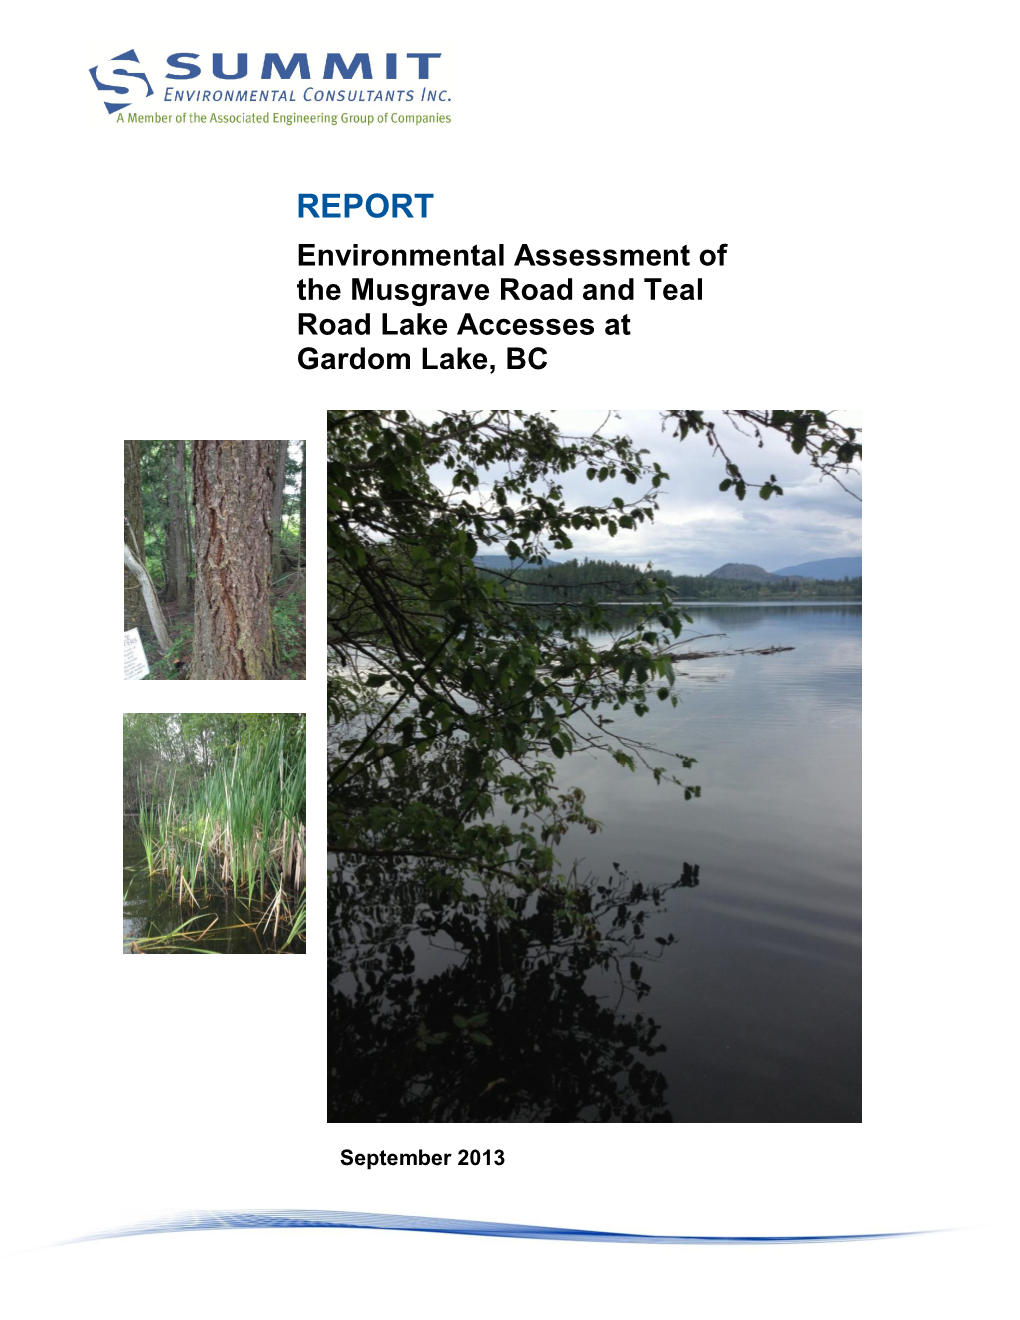 REPORT Environmental Assessment of the Musgrave Road and Teal Road Lake Accesses at Gardom Lake, BC